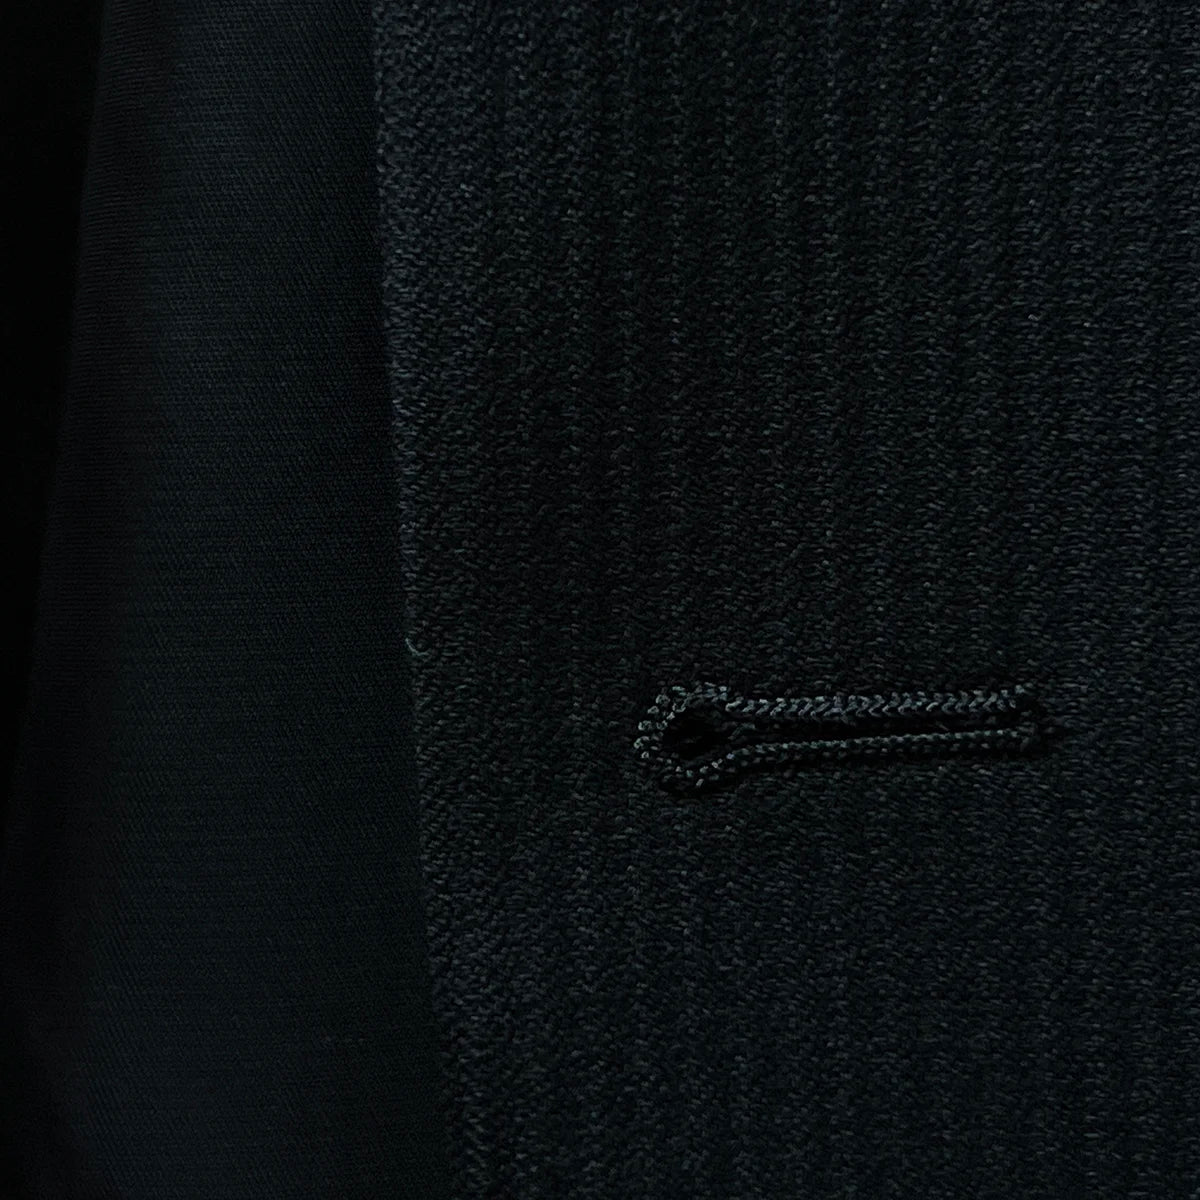 Image highlighting the buttonhole stitching on the jacket, demonstrating fine craftsmanship.